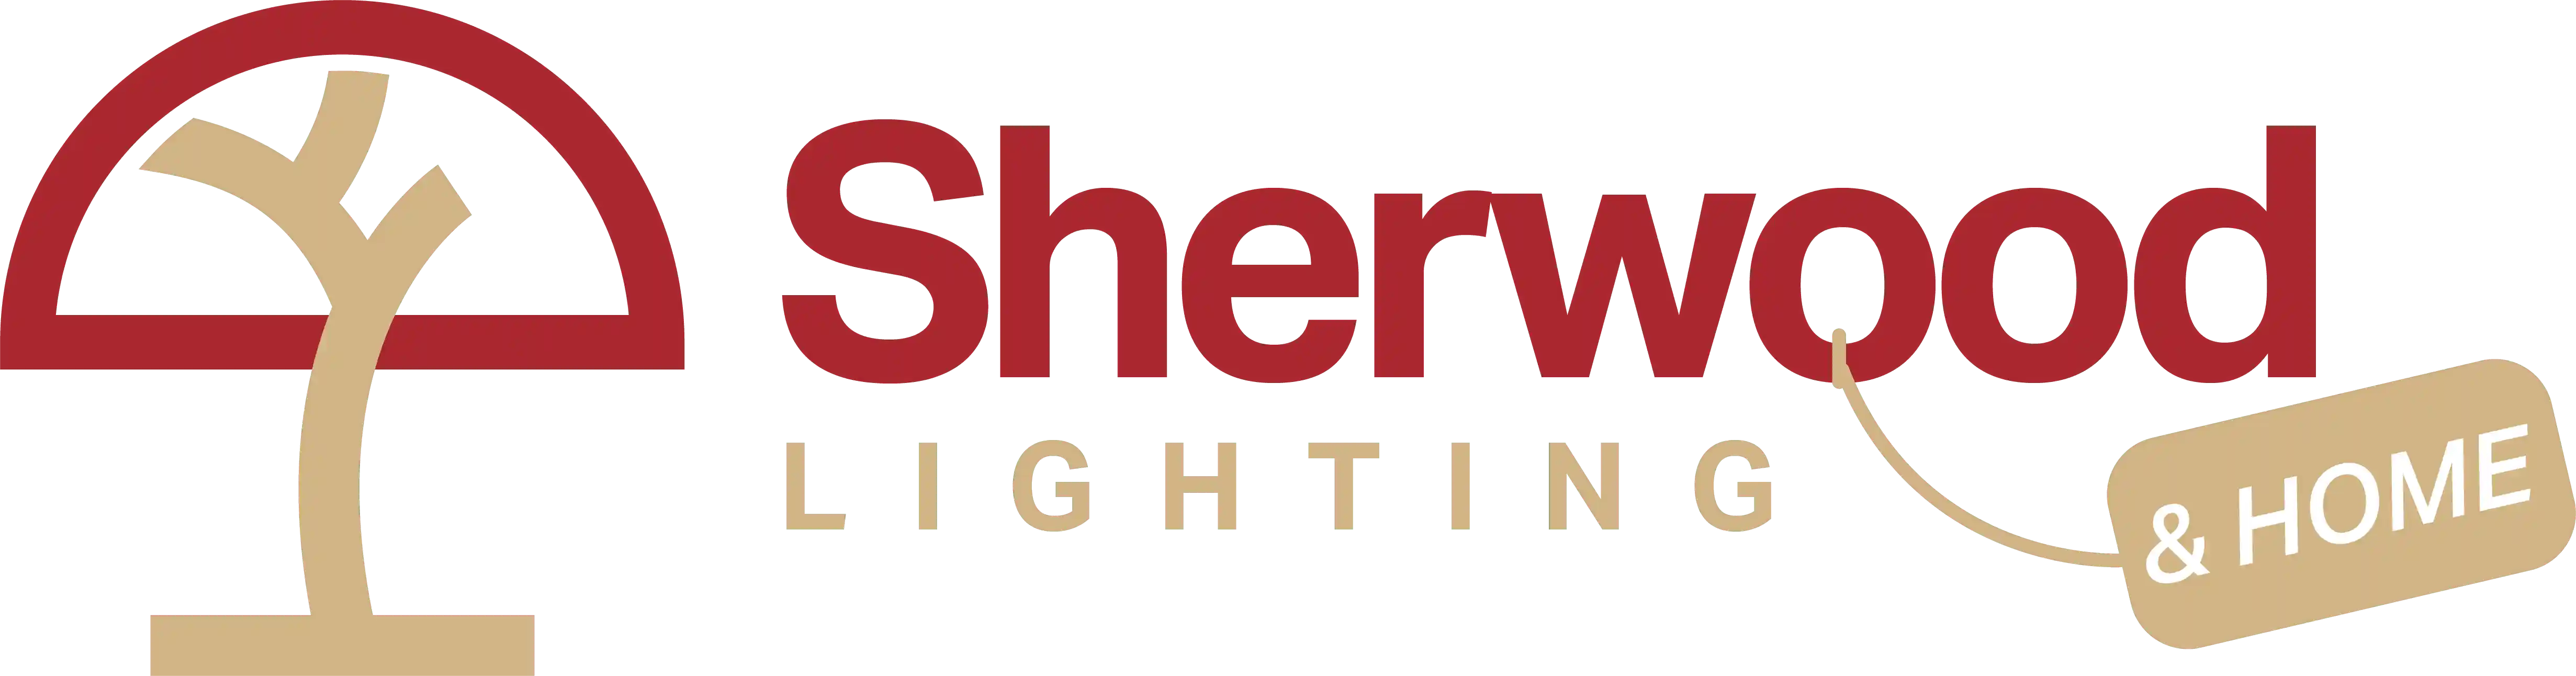  Sherwood Lighting discount code